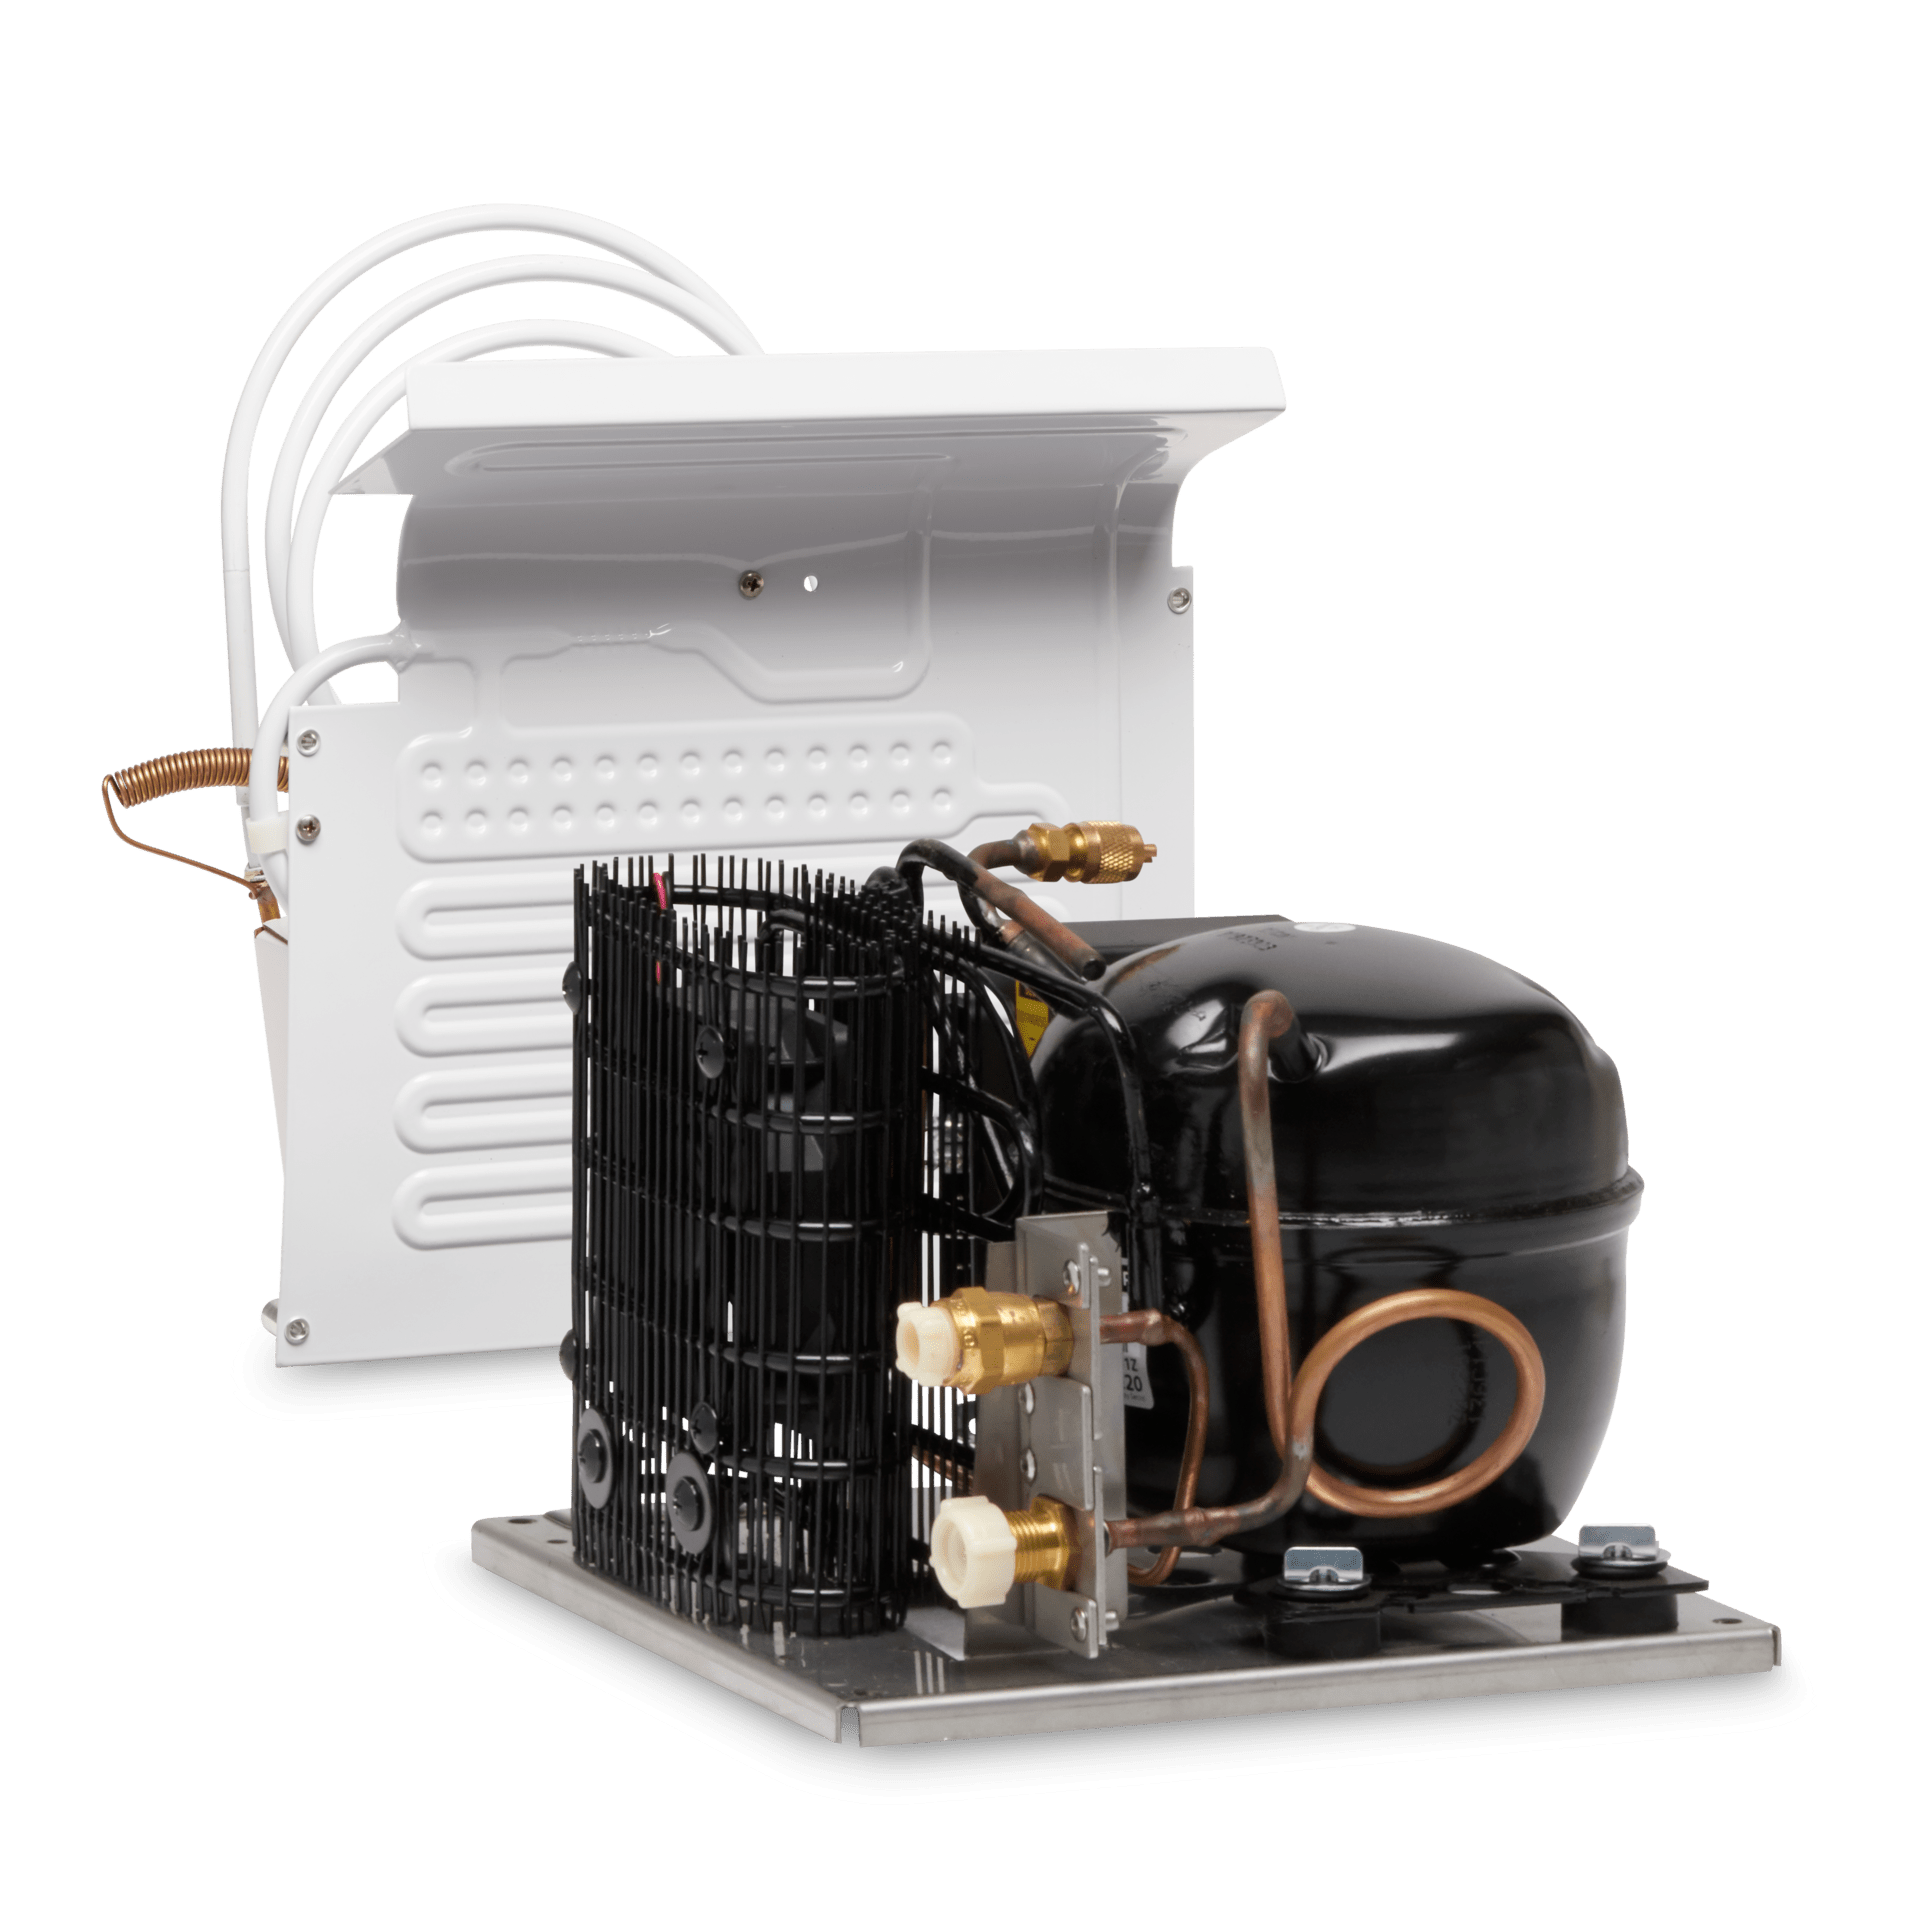 Indel B Cruise 86 Liter Kompressor-Kühlschrank